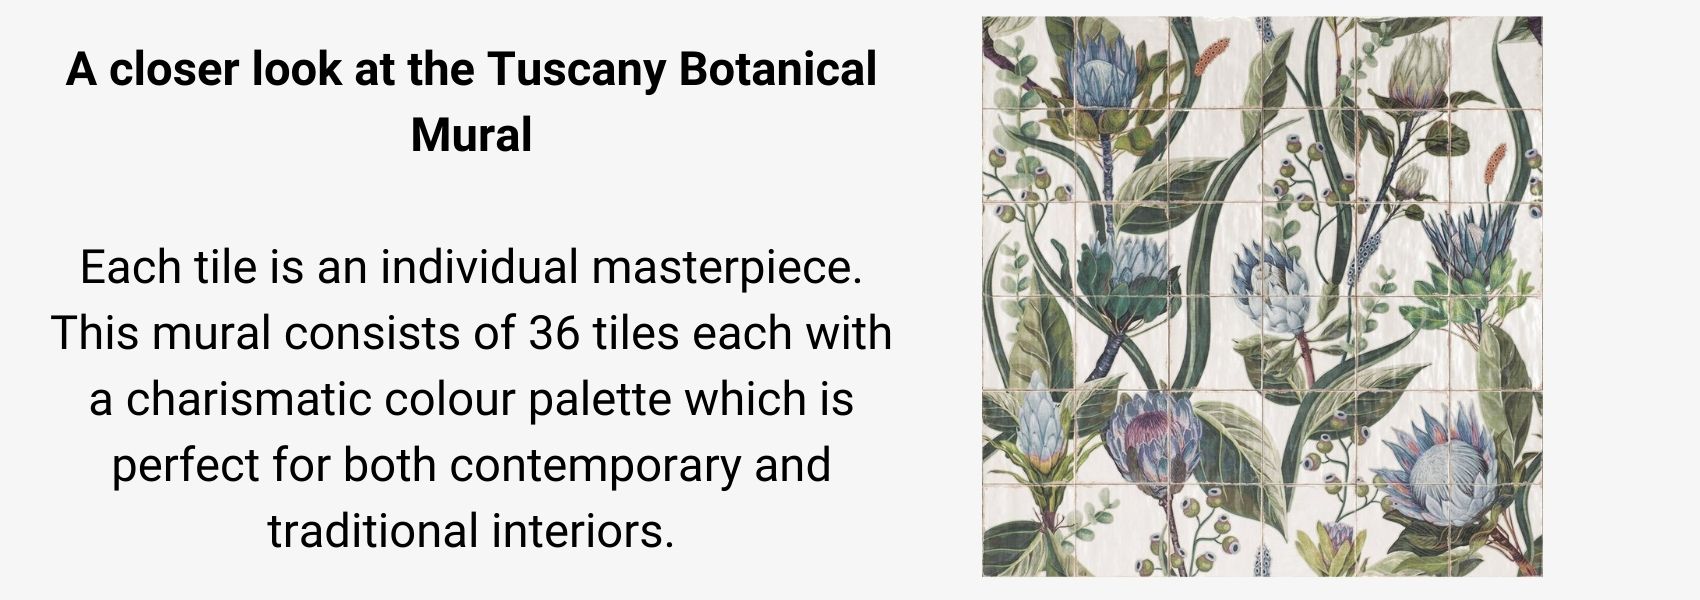 Tuscany Botanical mural